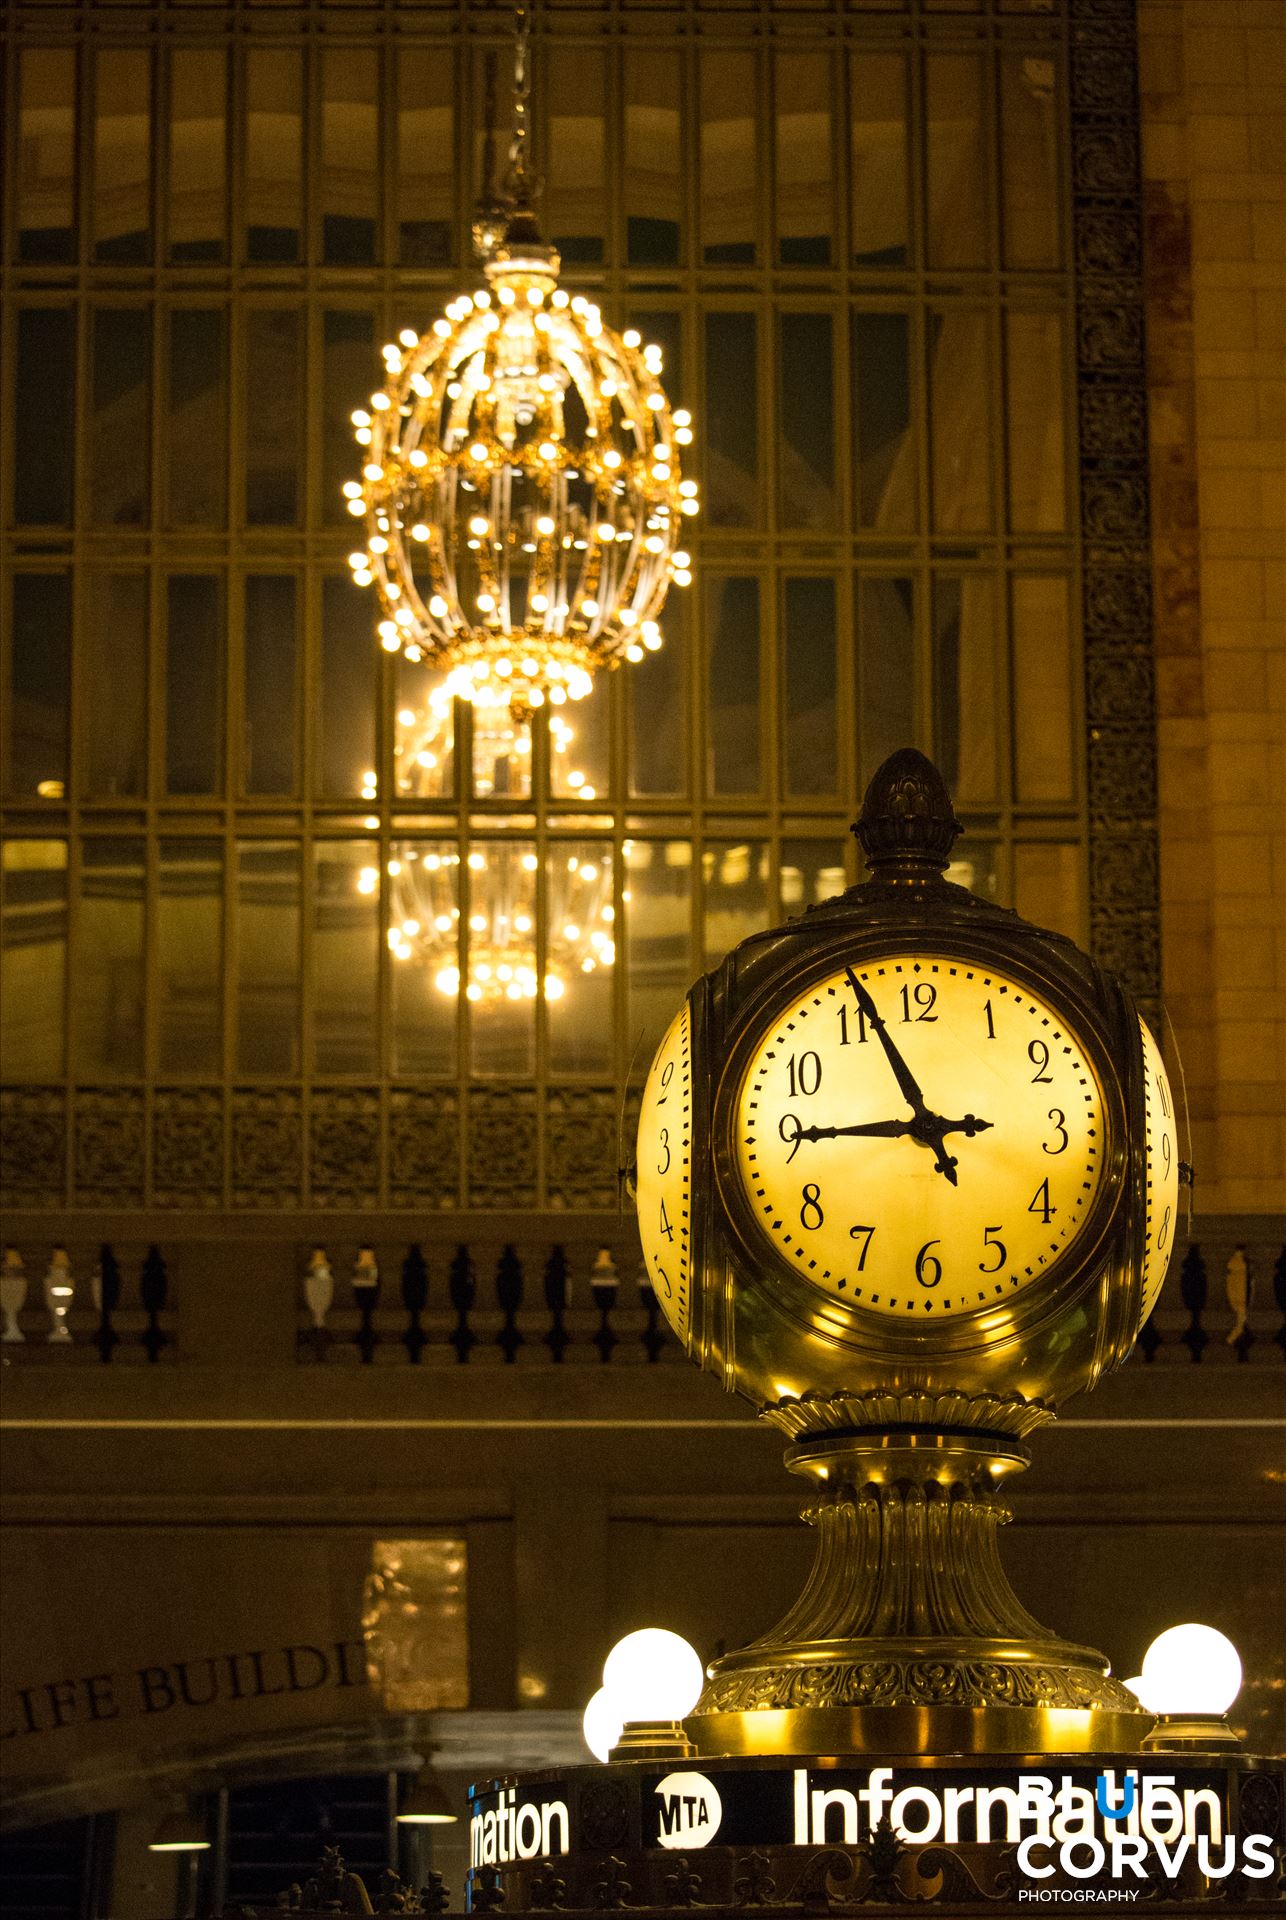 "Information" Location: Grand Central Station, New York, NY by Eddie Zamora